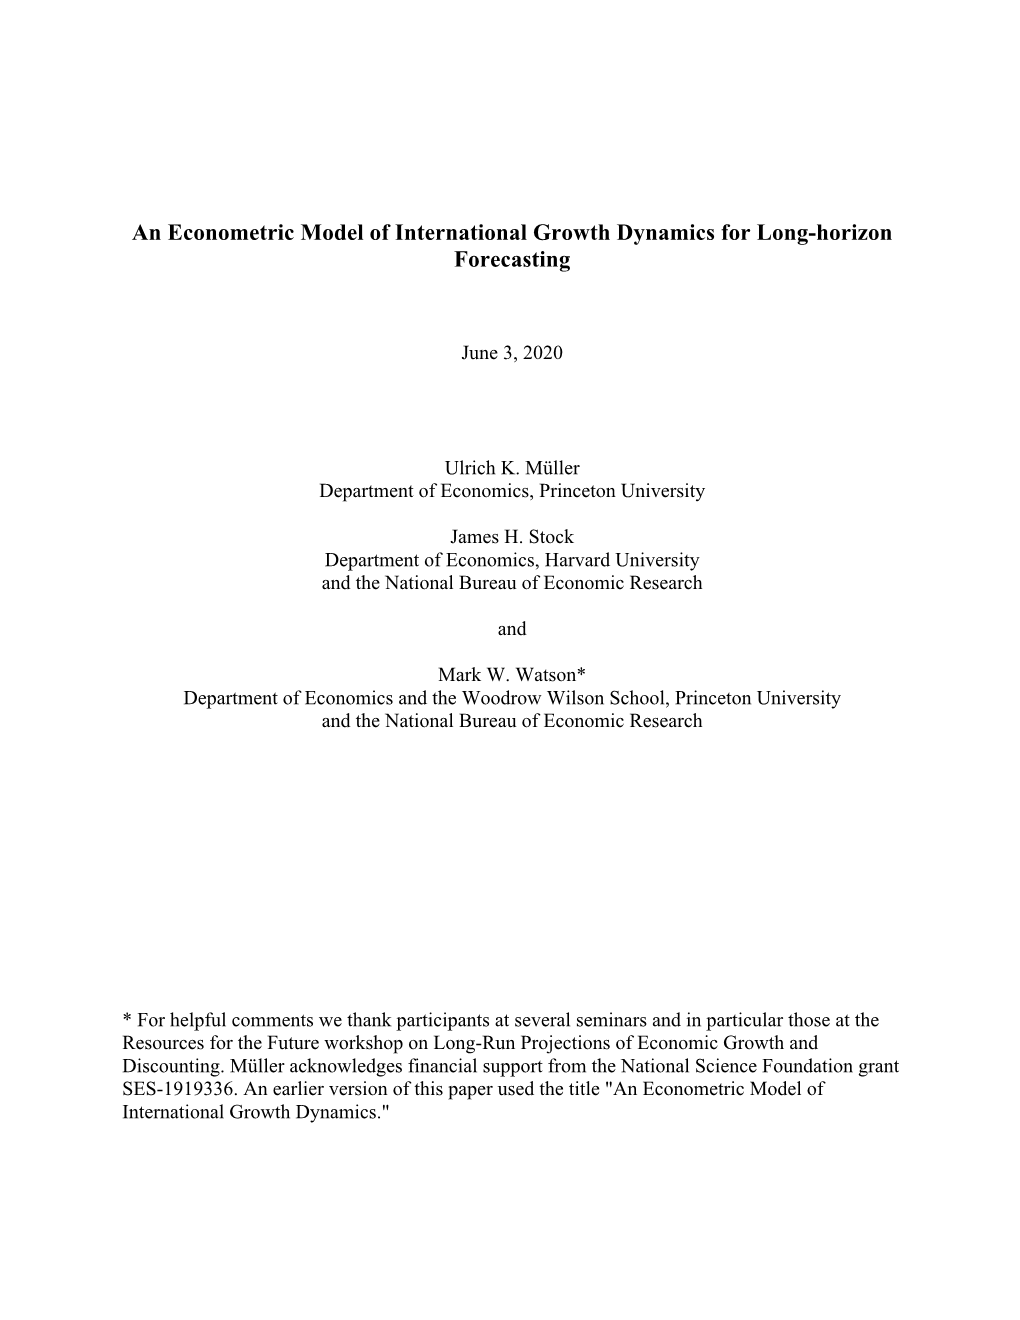 An Econometric Model of International Growth Dynamics for Long-Horizon Forecasting